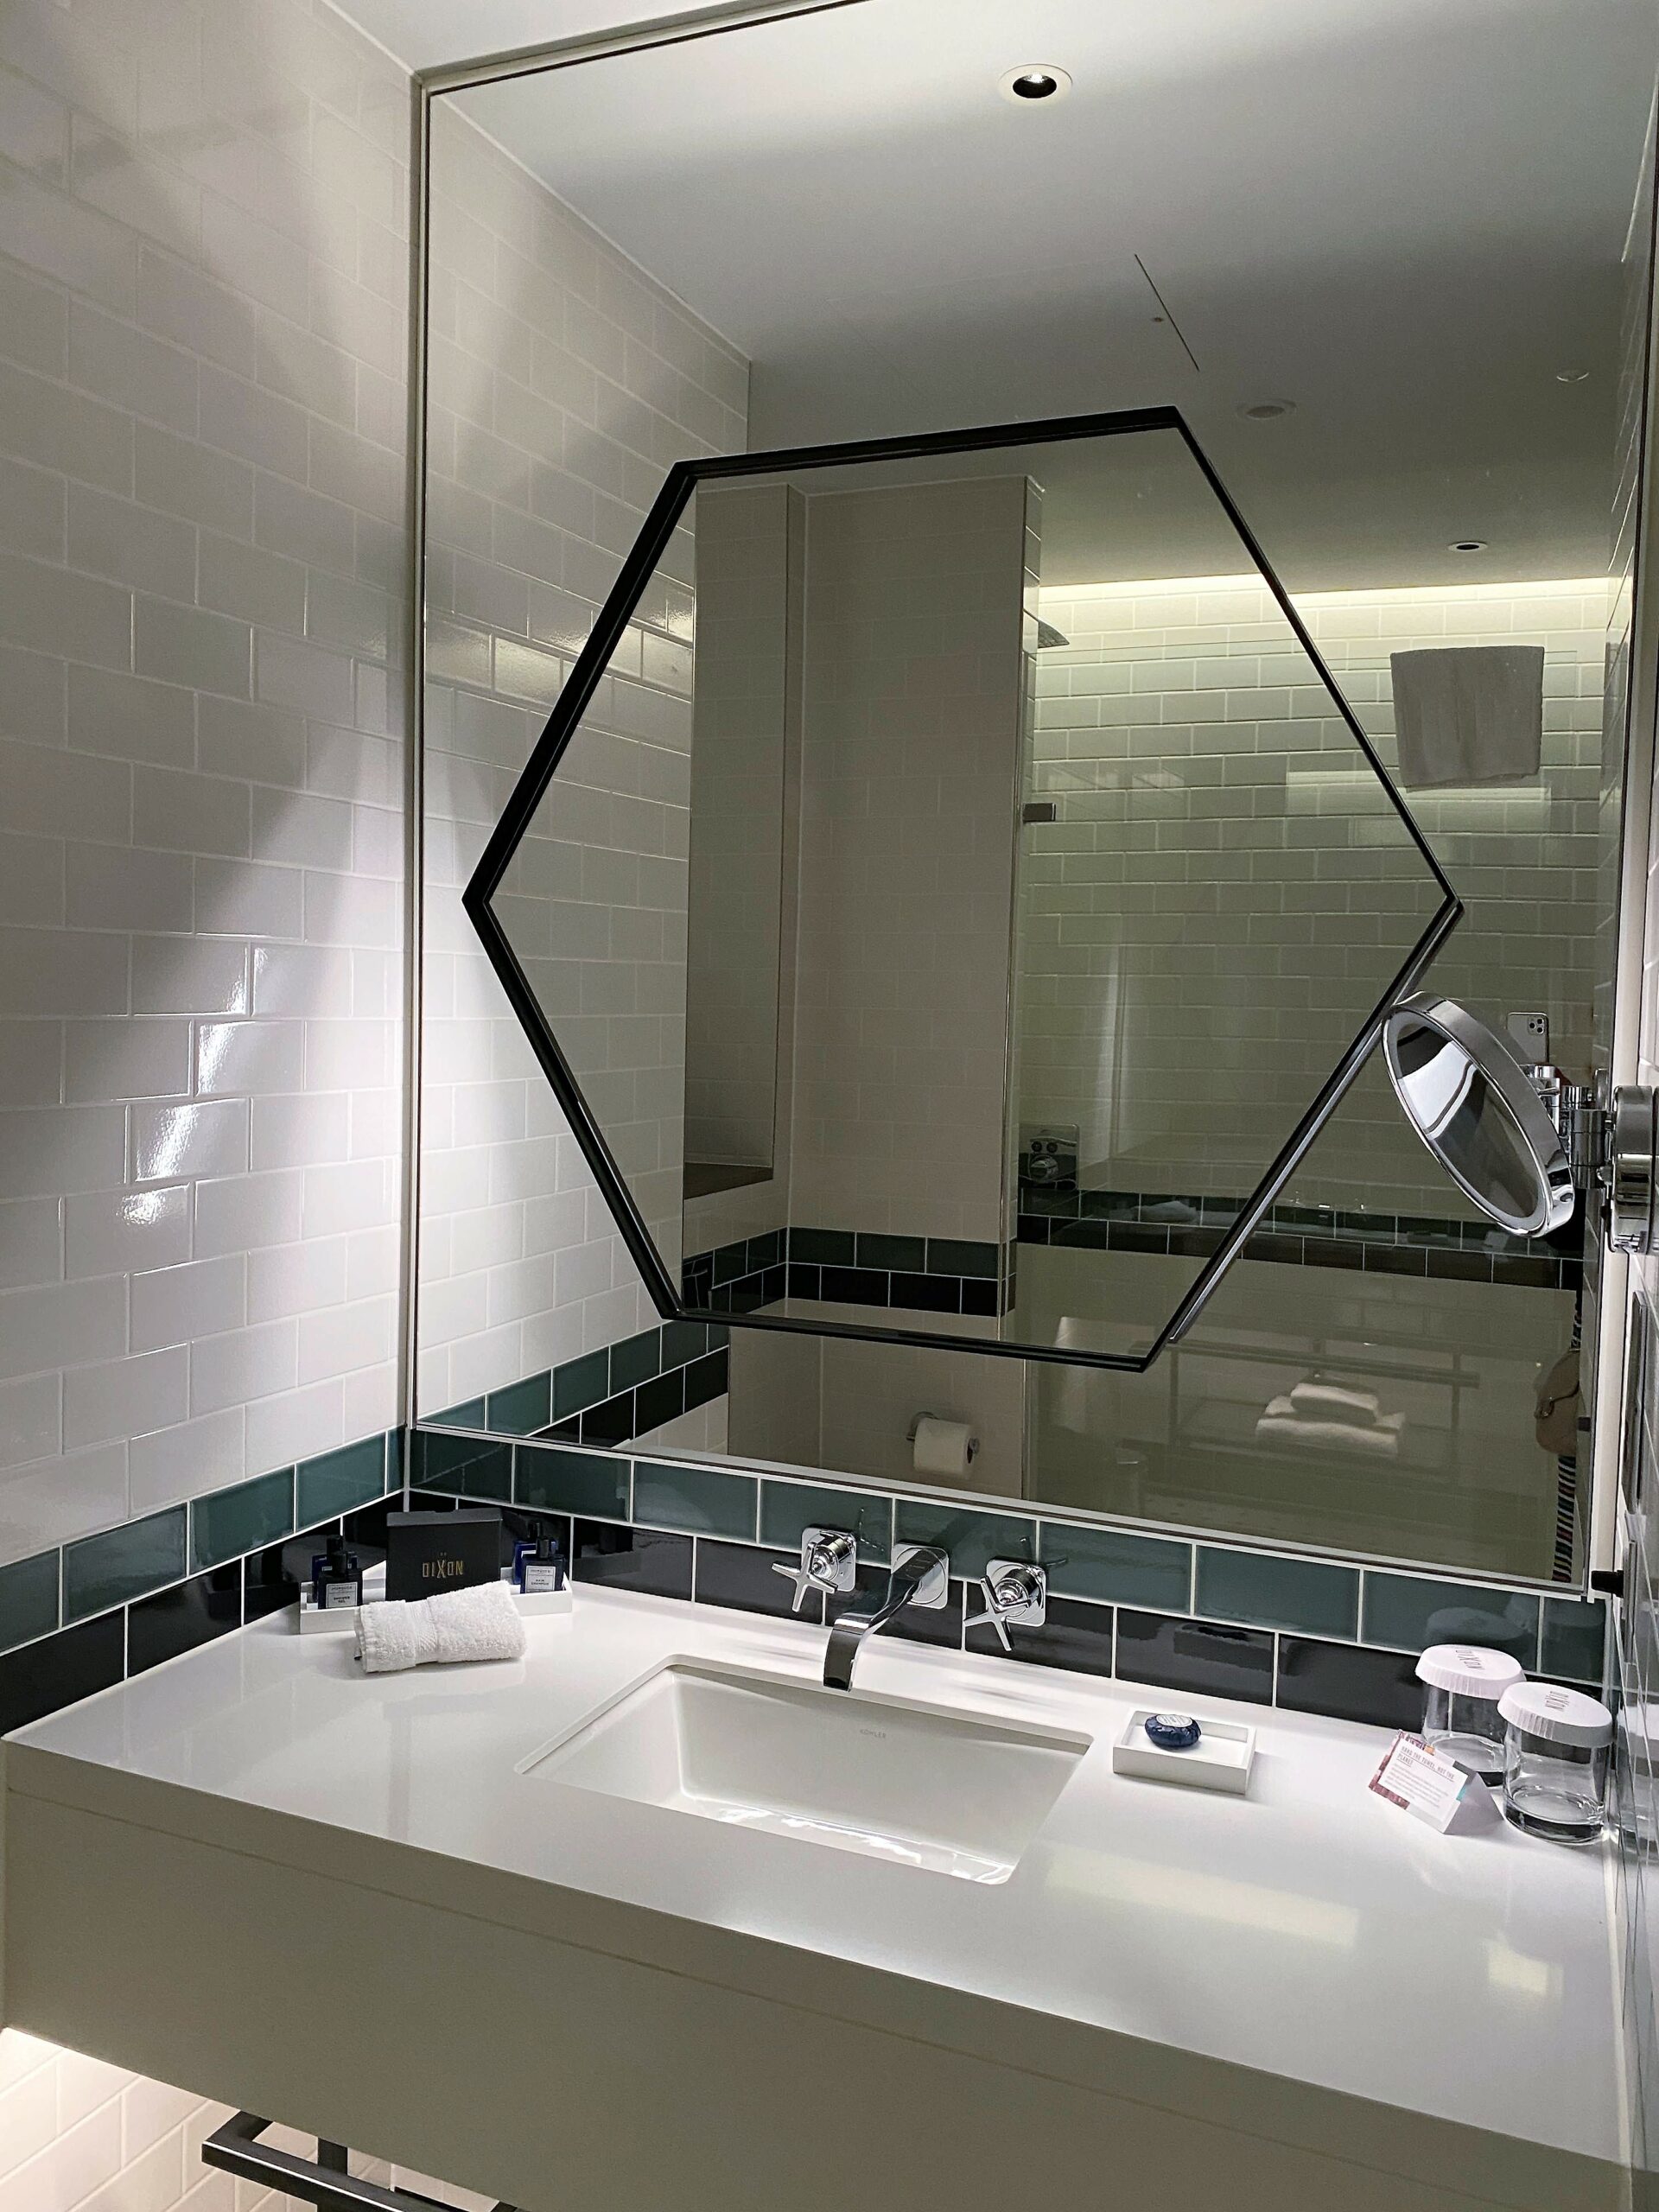 The Dixon hotel bathroom Sink 